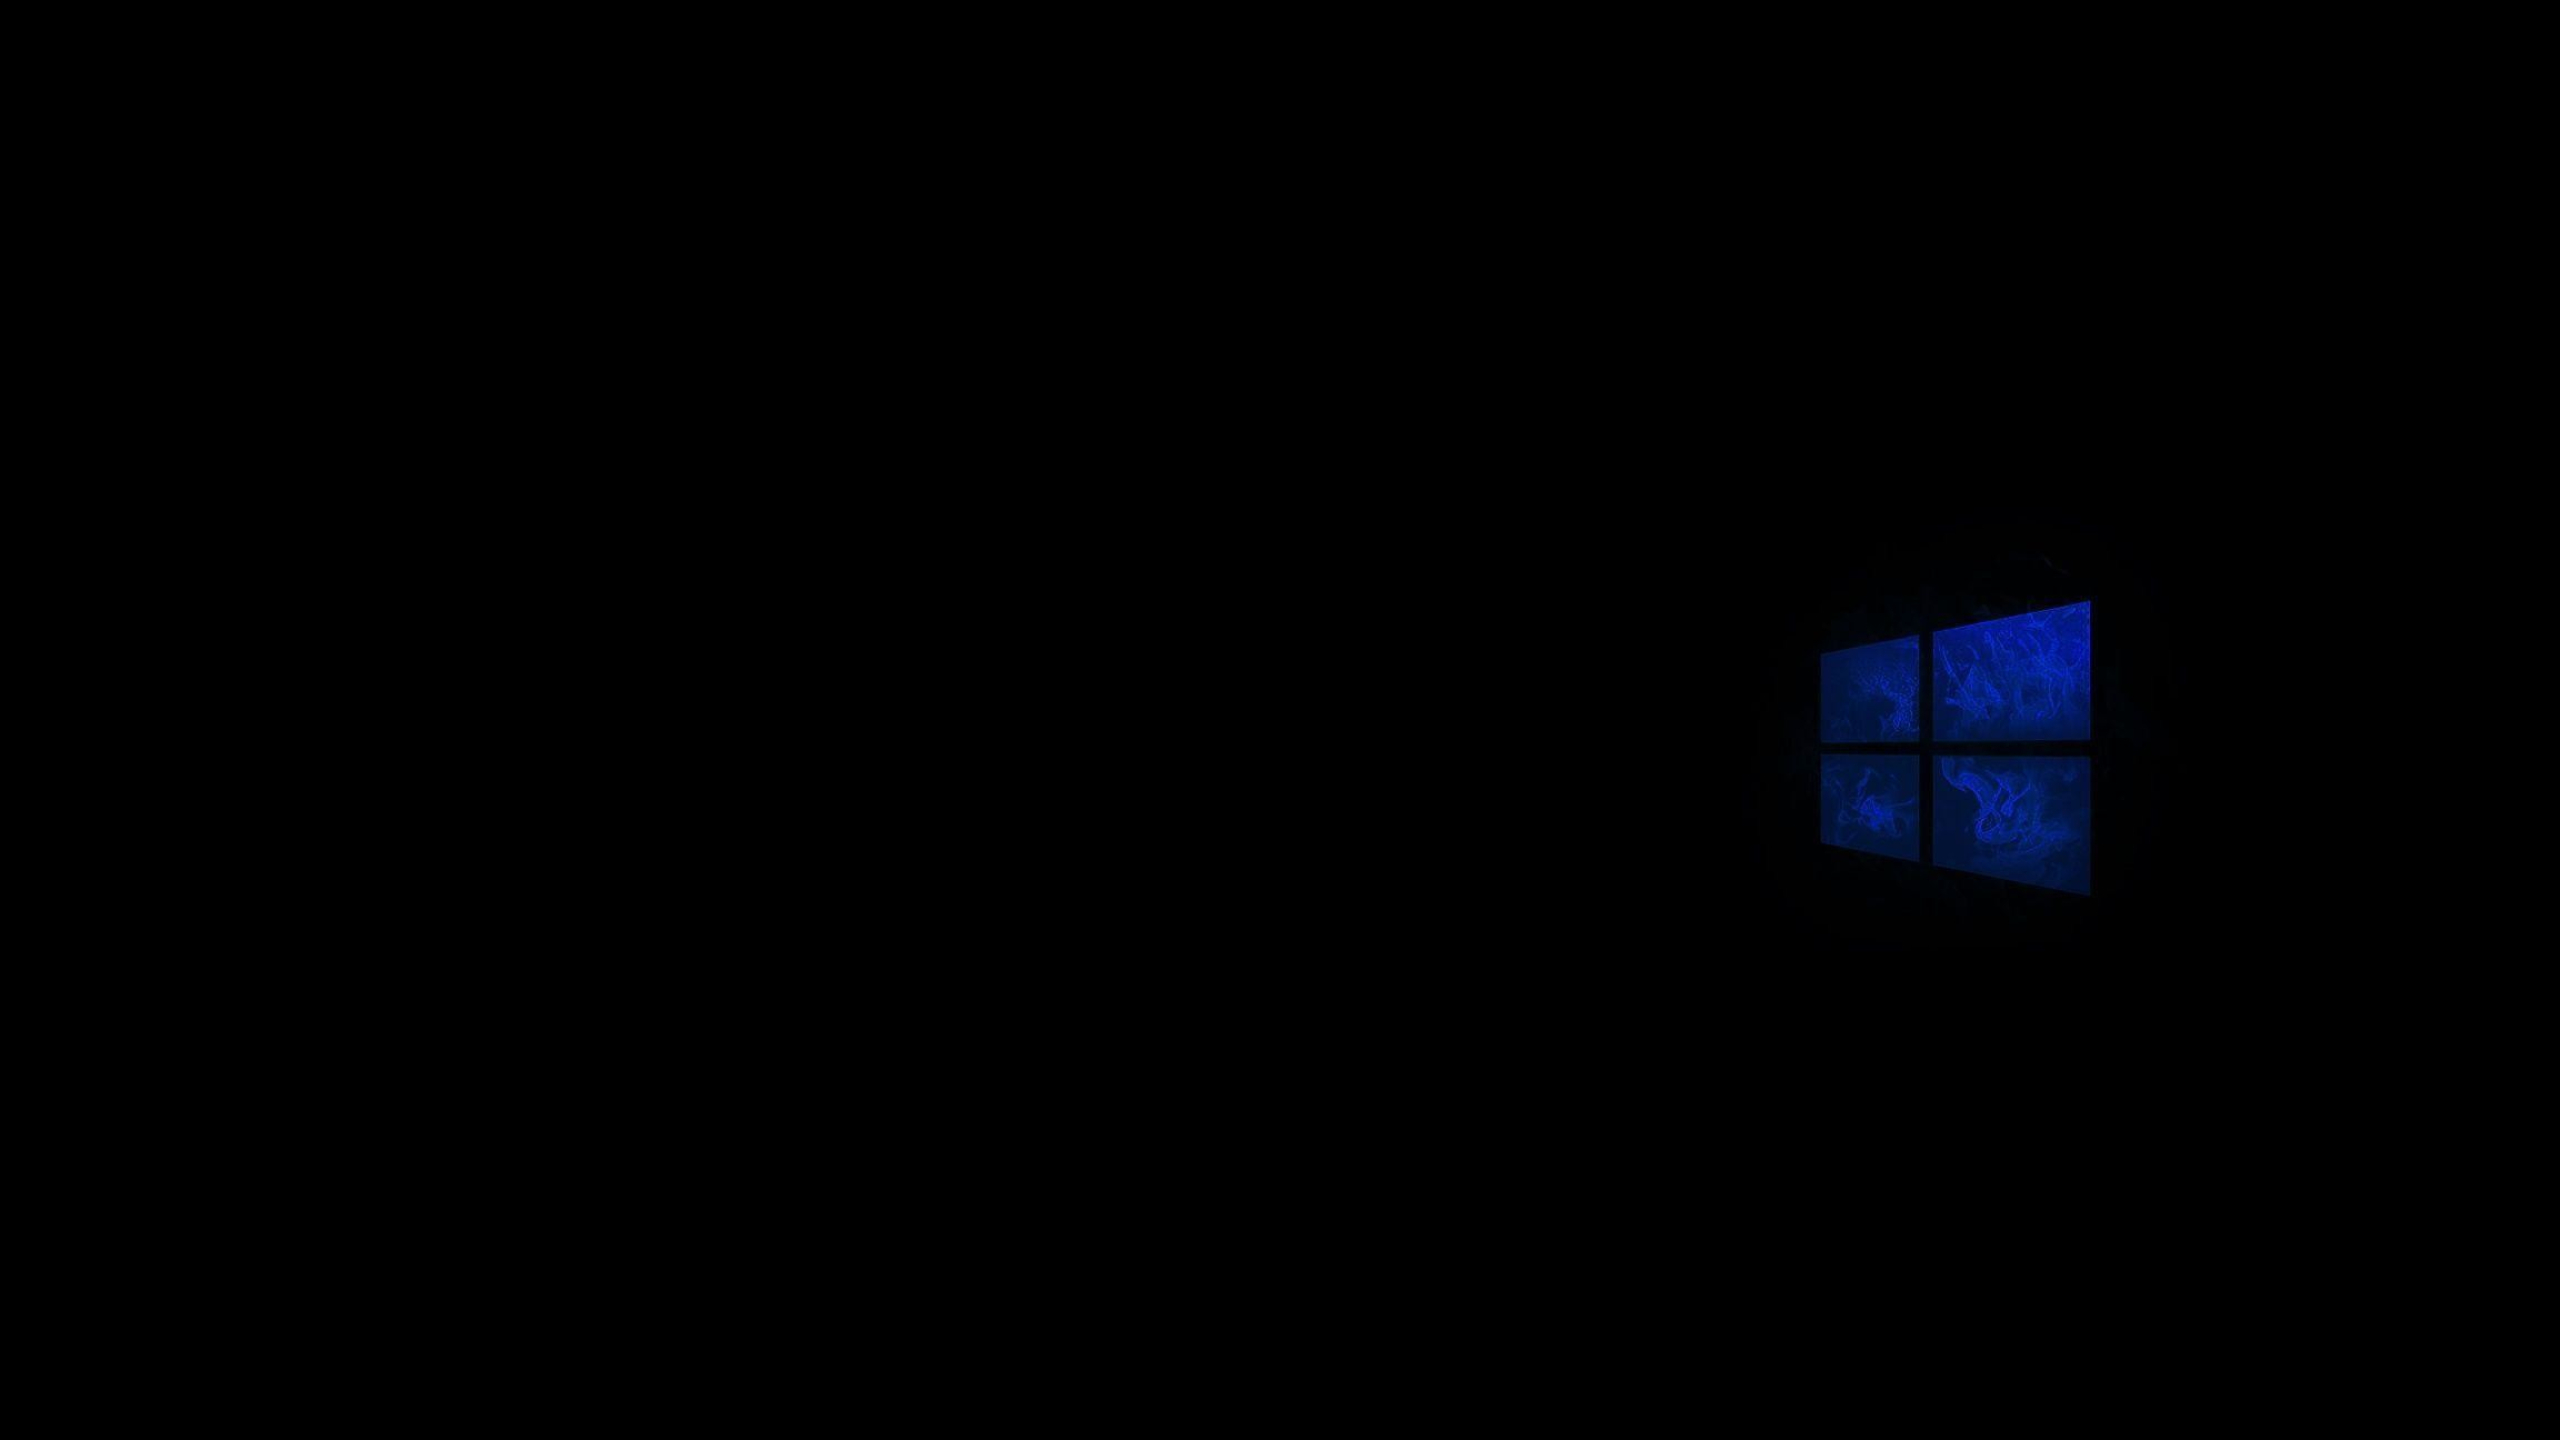 2560x1440 Windows 8 Black Wallpaper (58+ pictures